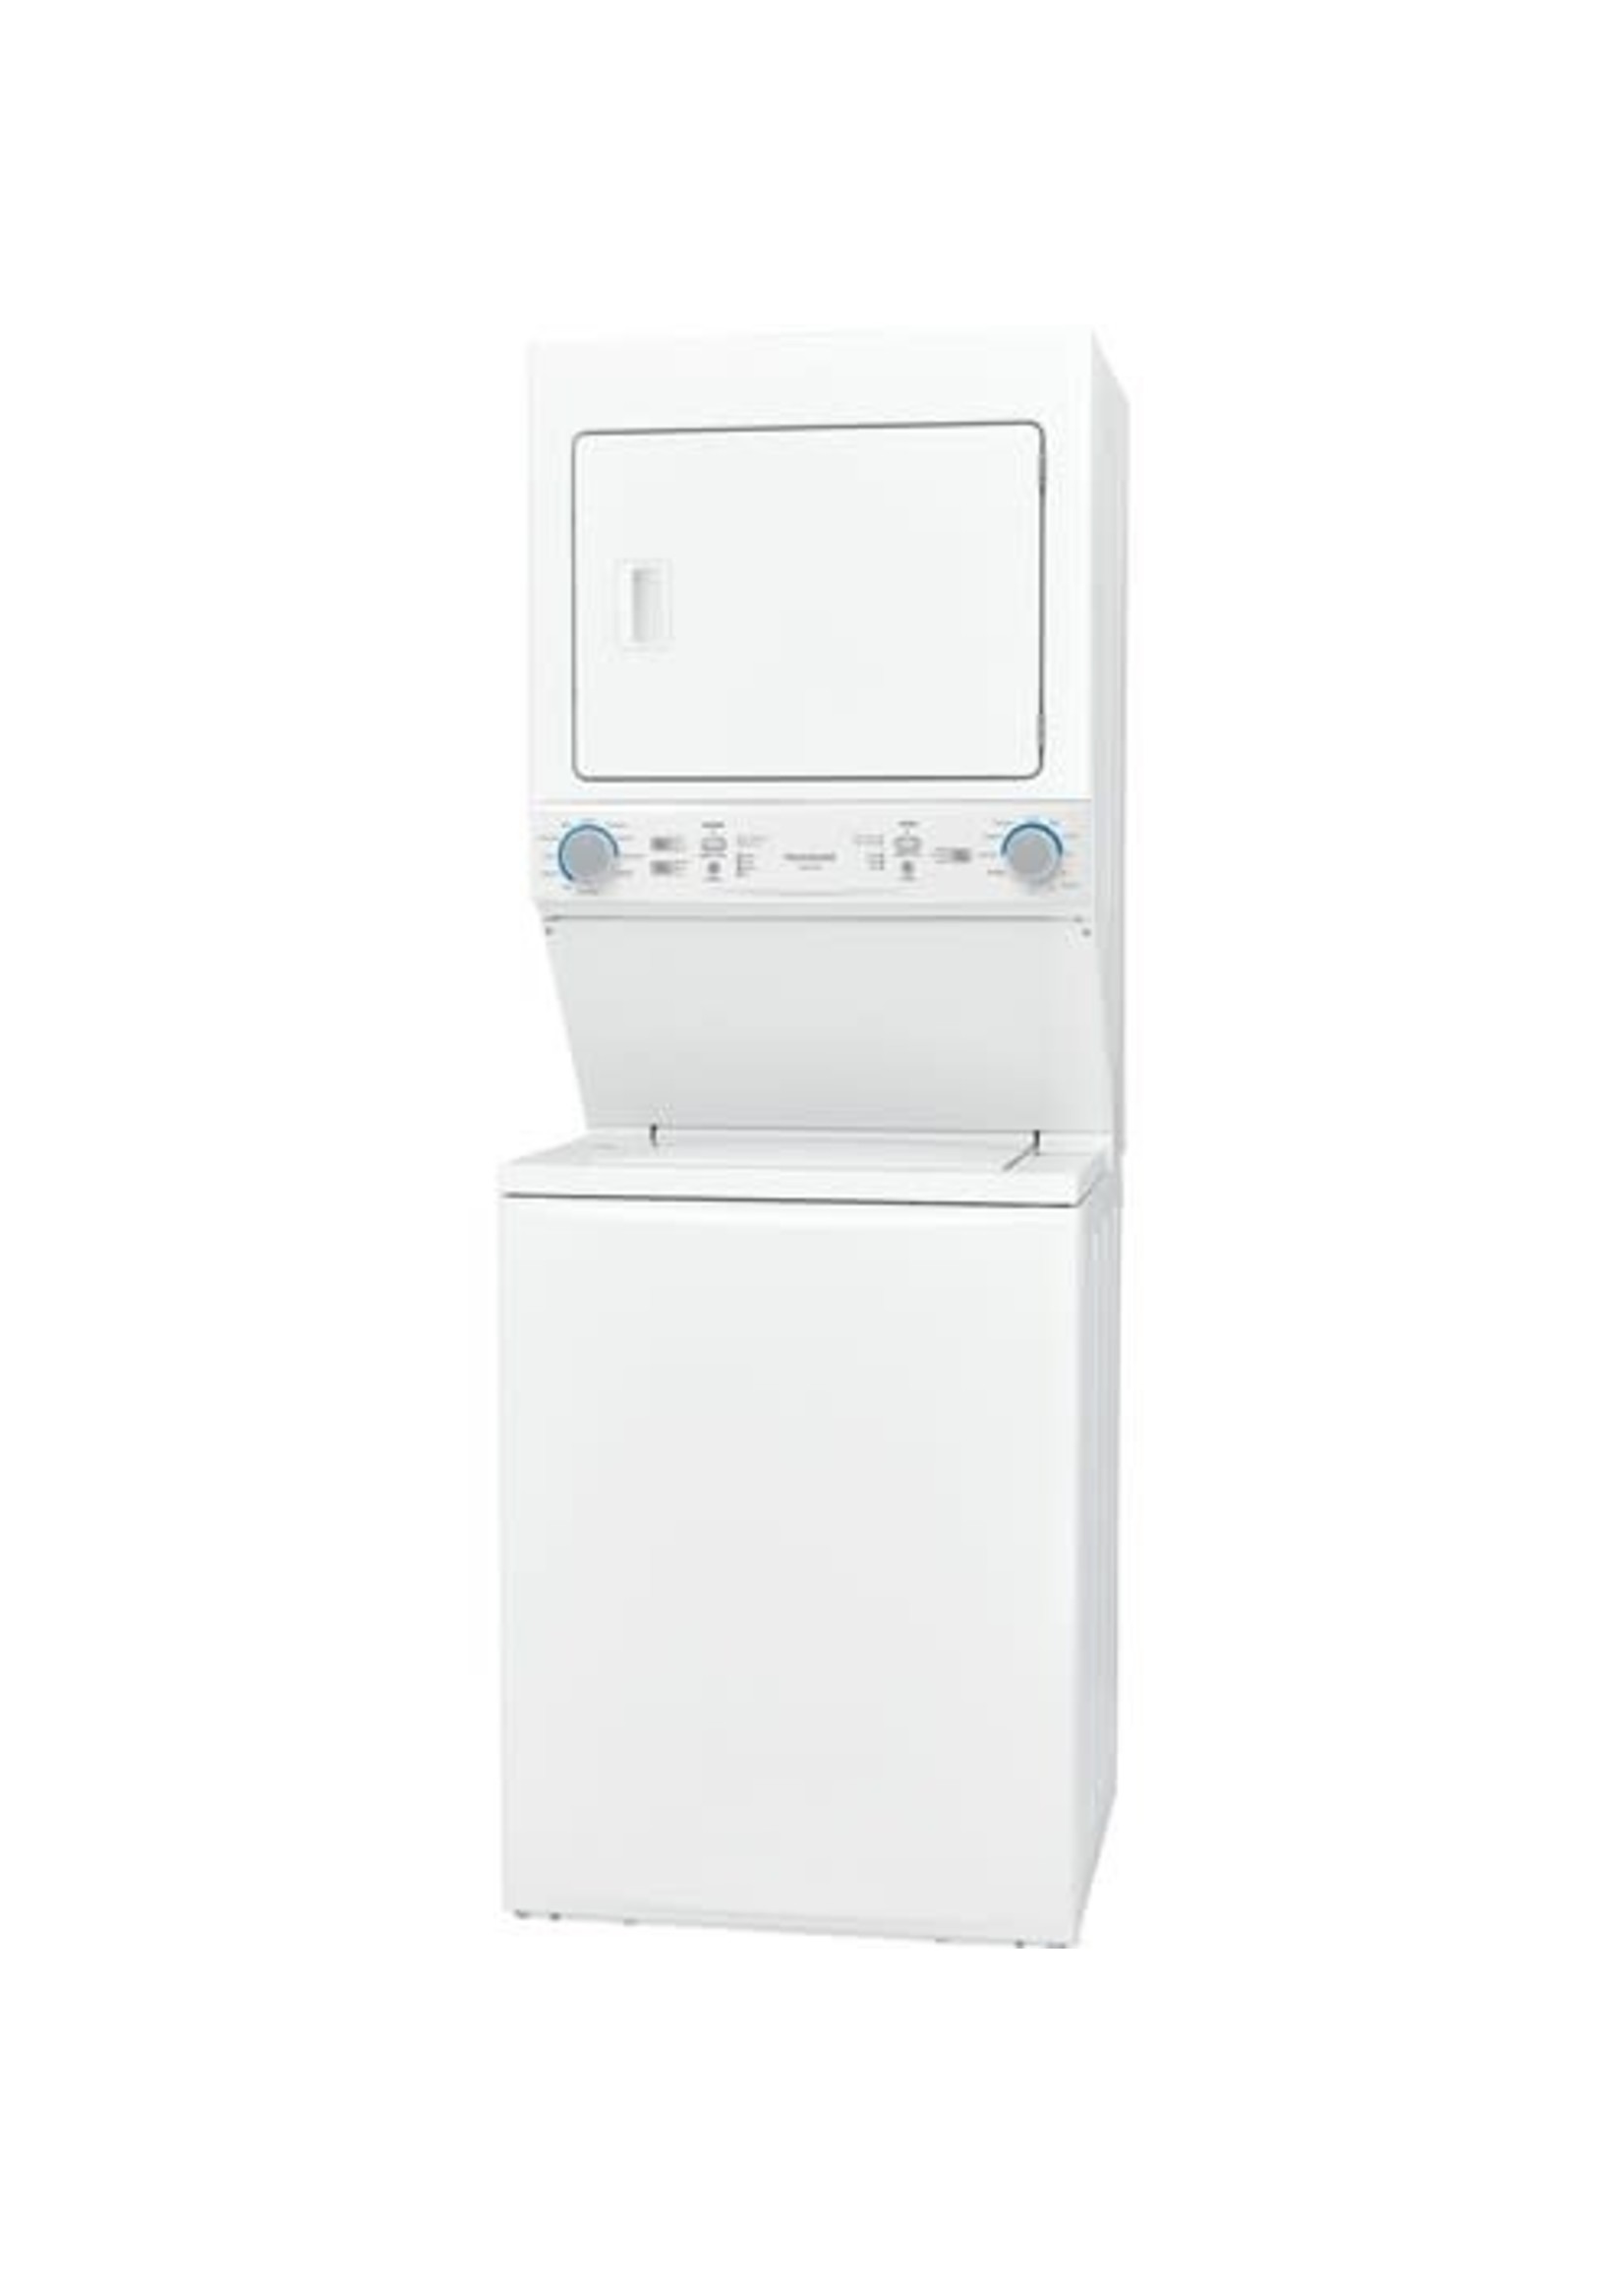 FRIGIDAIRE FLCE7522AW  Laundry Center 5.6 CF Elec Dryer 3.9 CF Washer - White